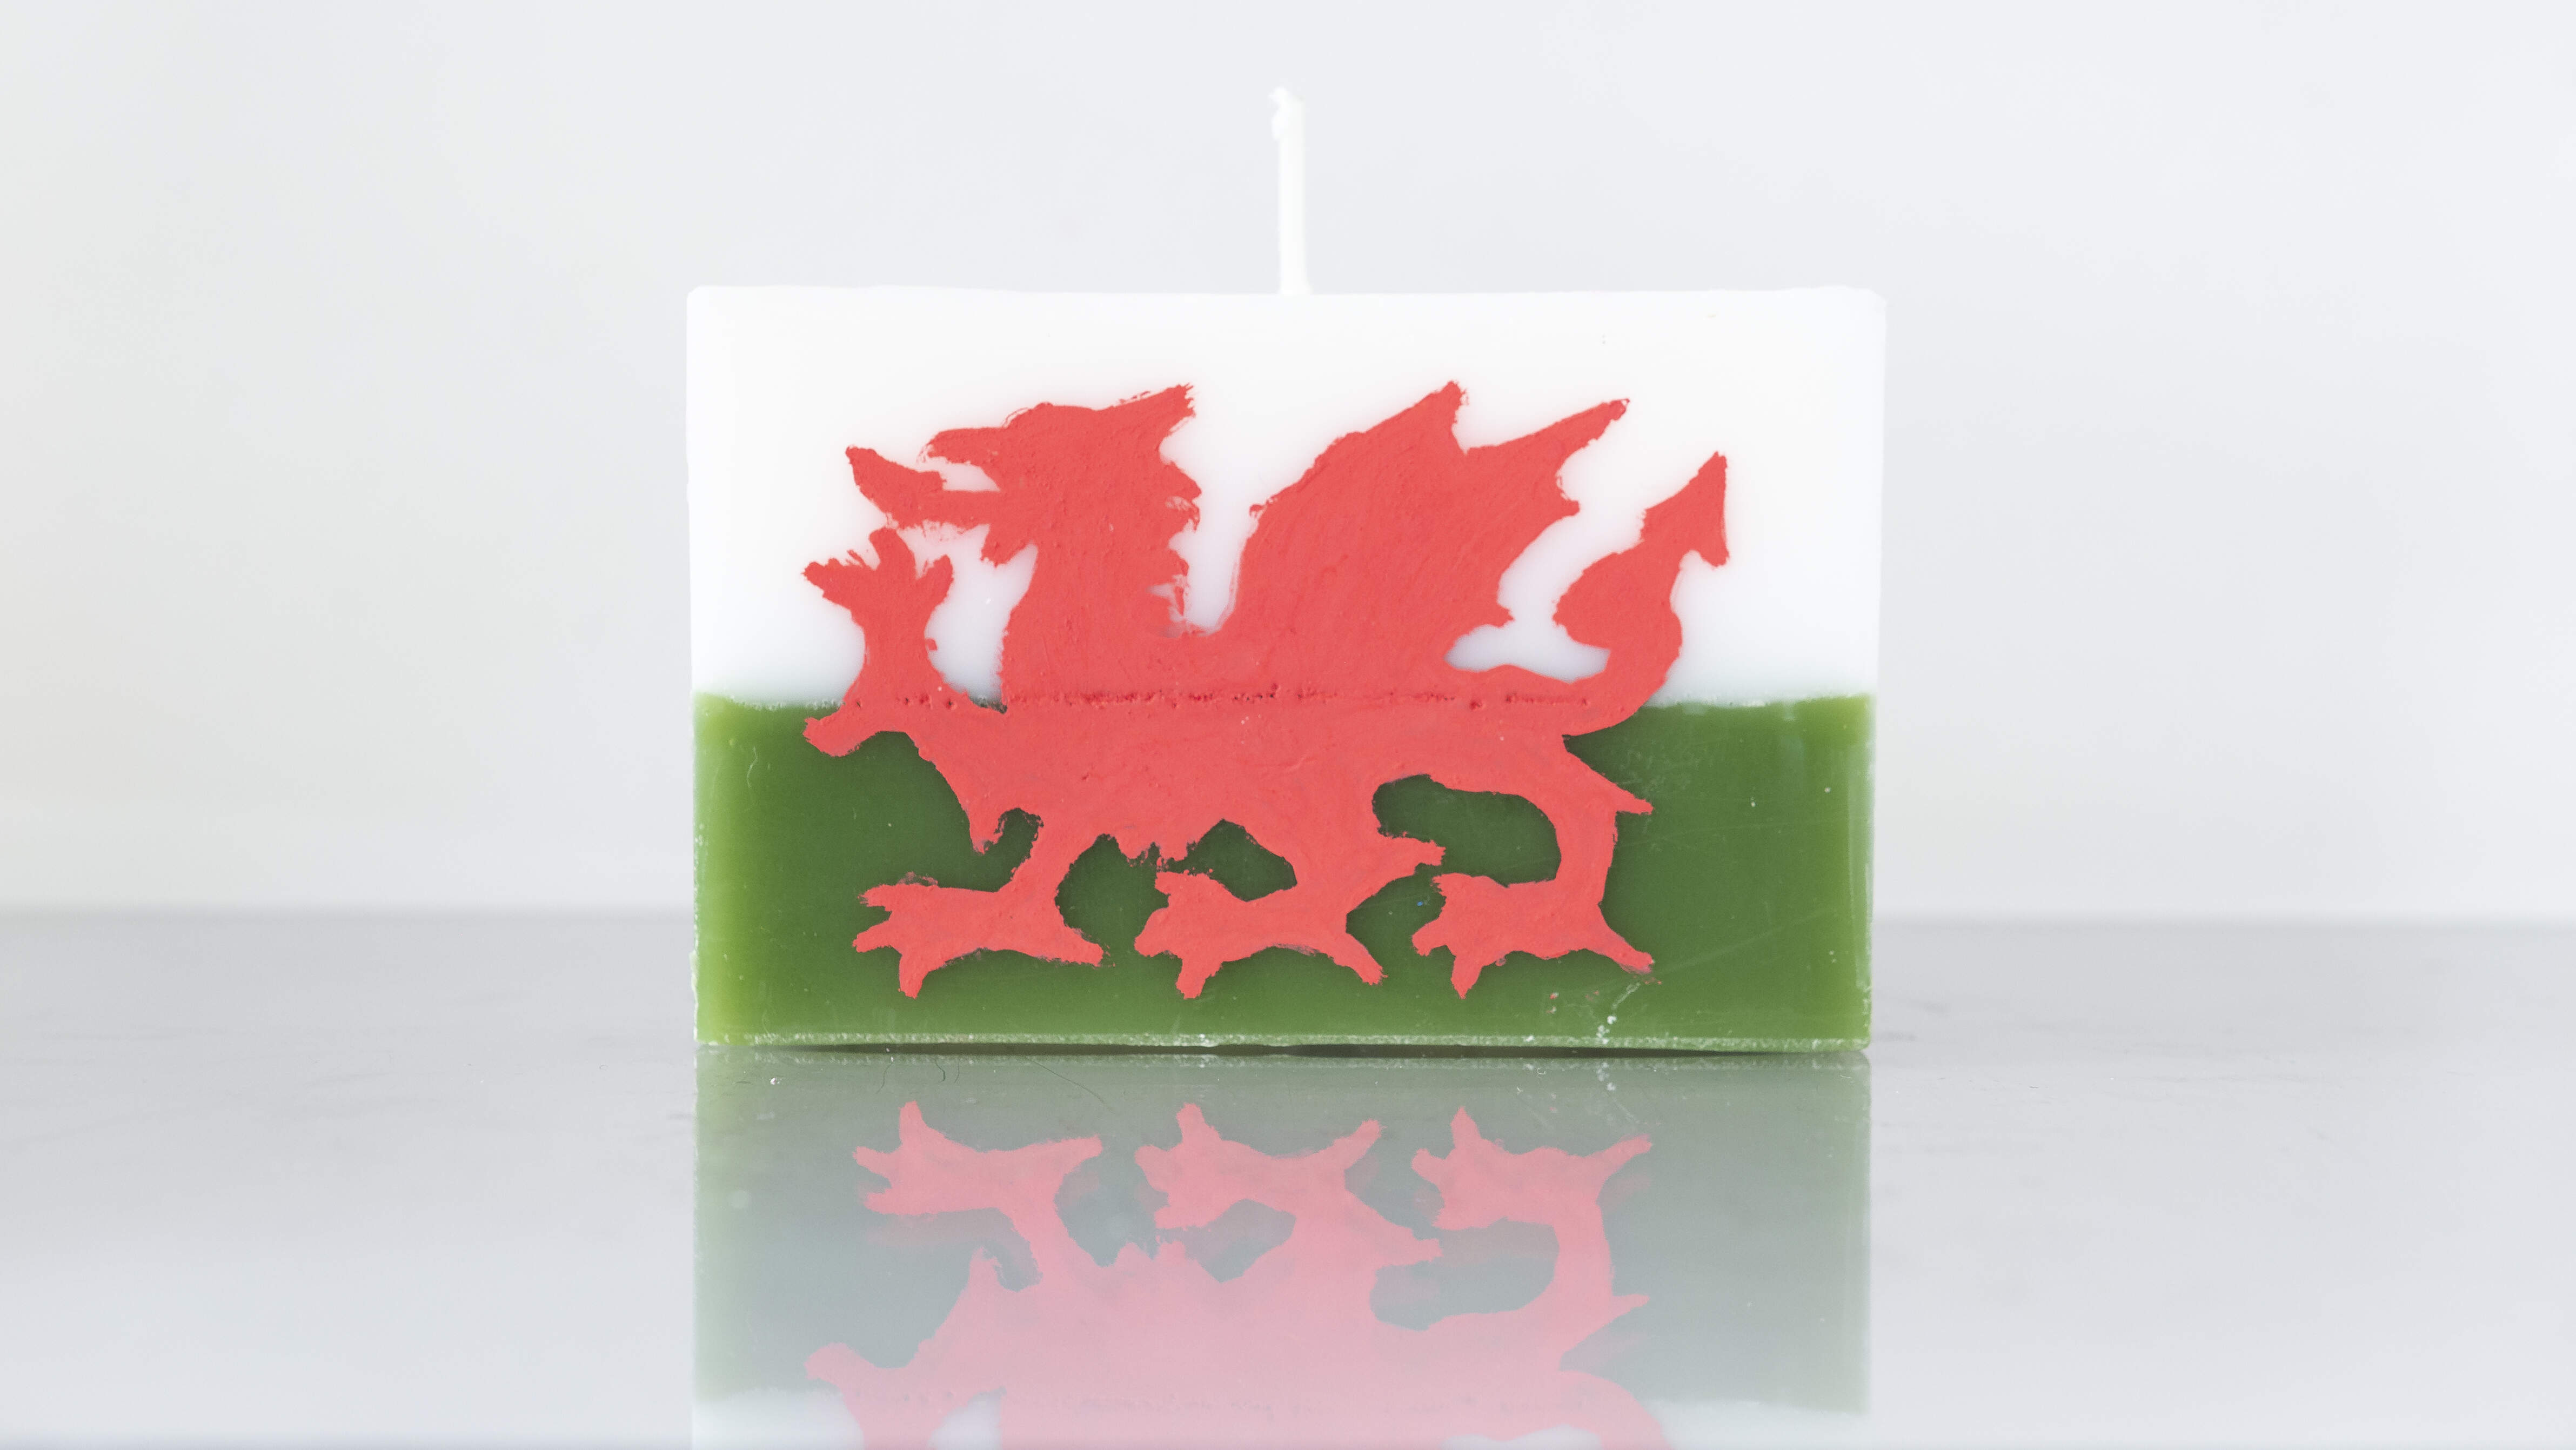 burn-a-flag: Wales